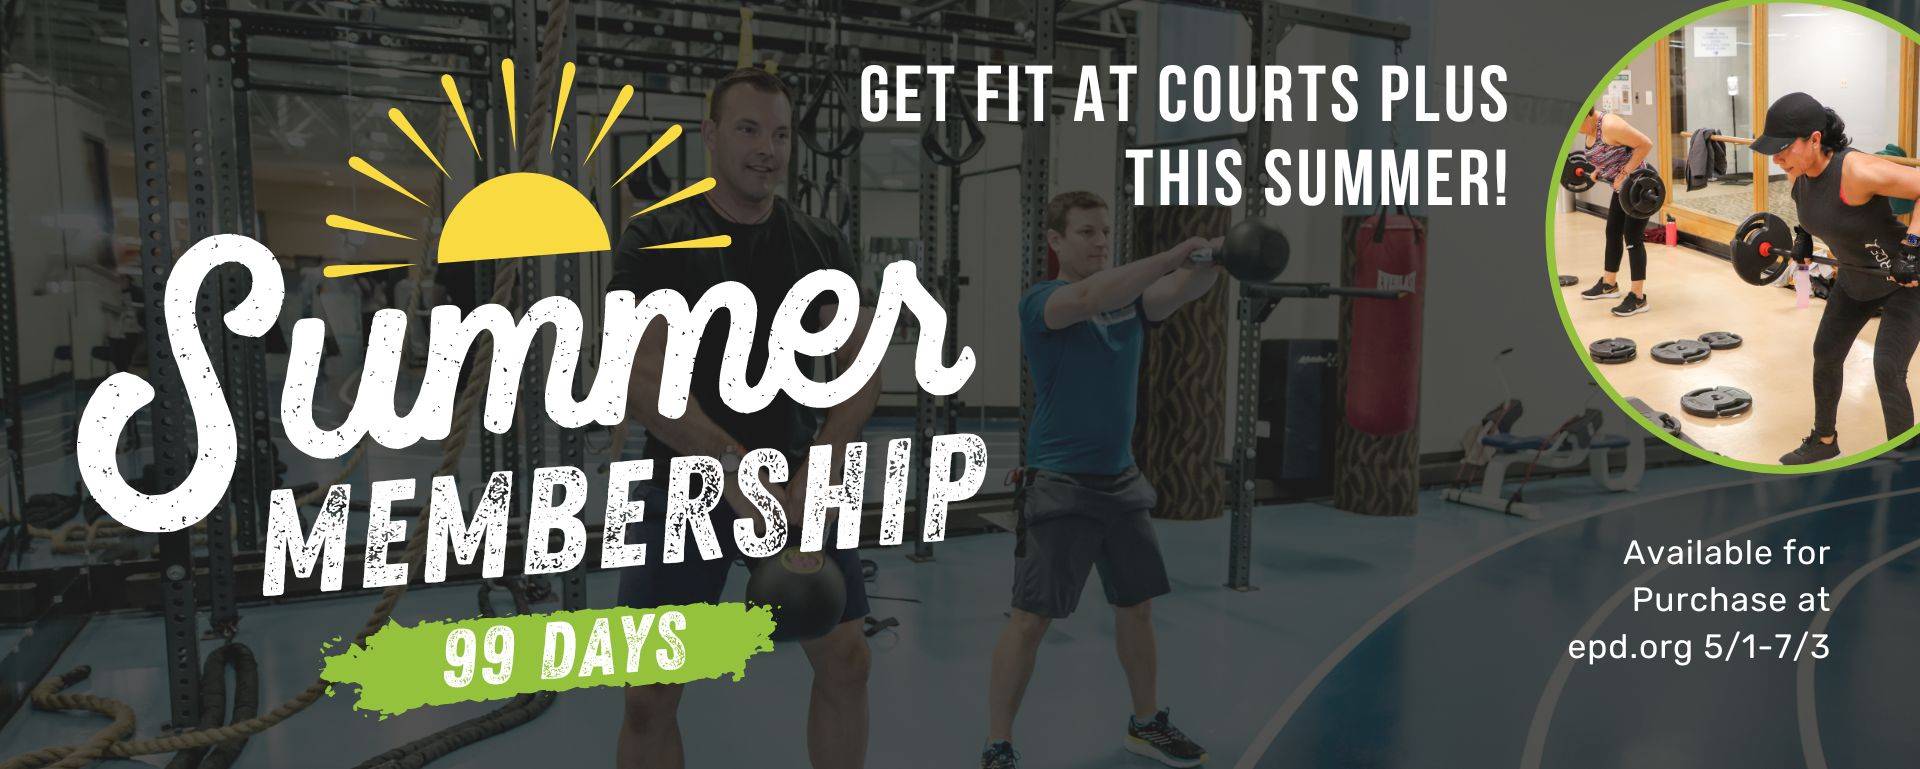 Summer Membership at courts plus